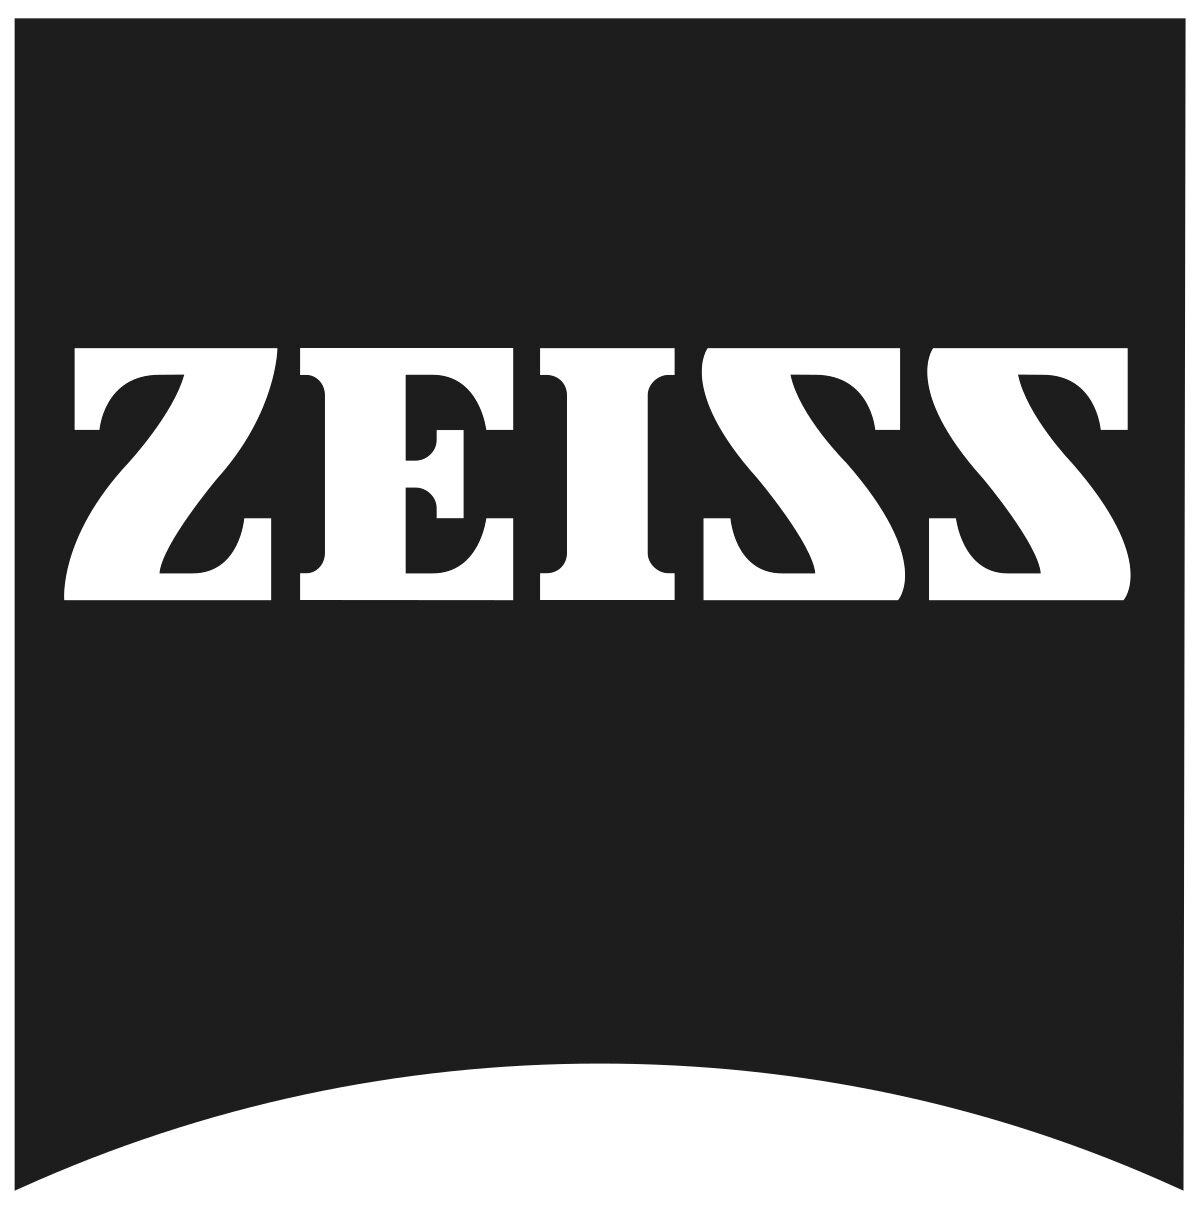 1200px-Zeiss_logo.svg.jpg